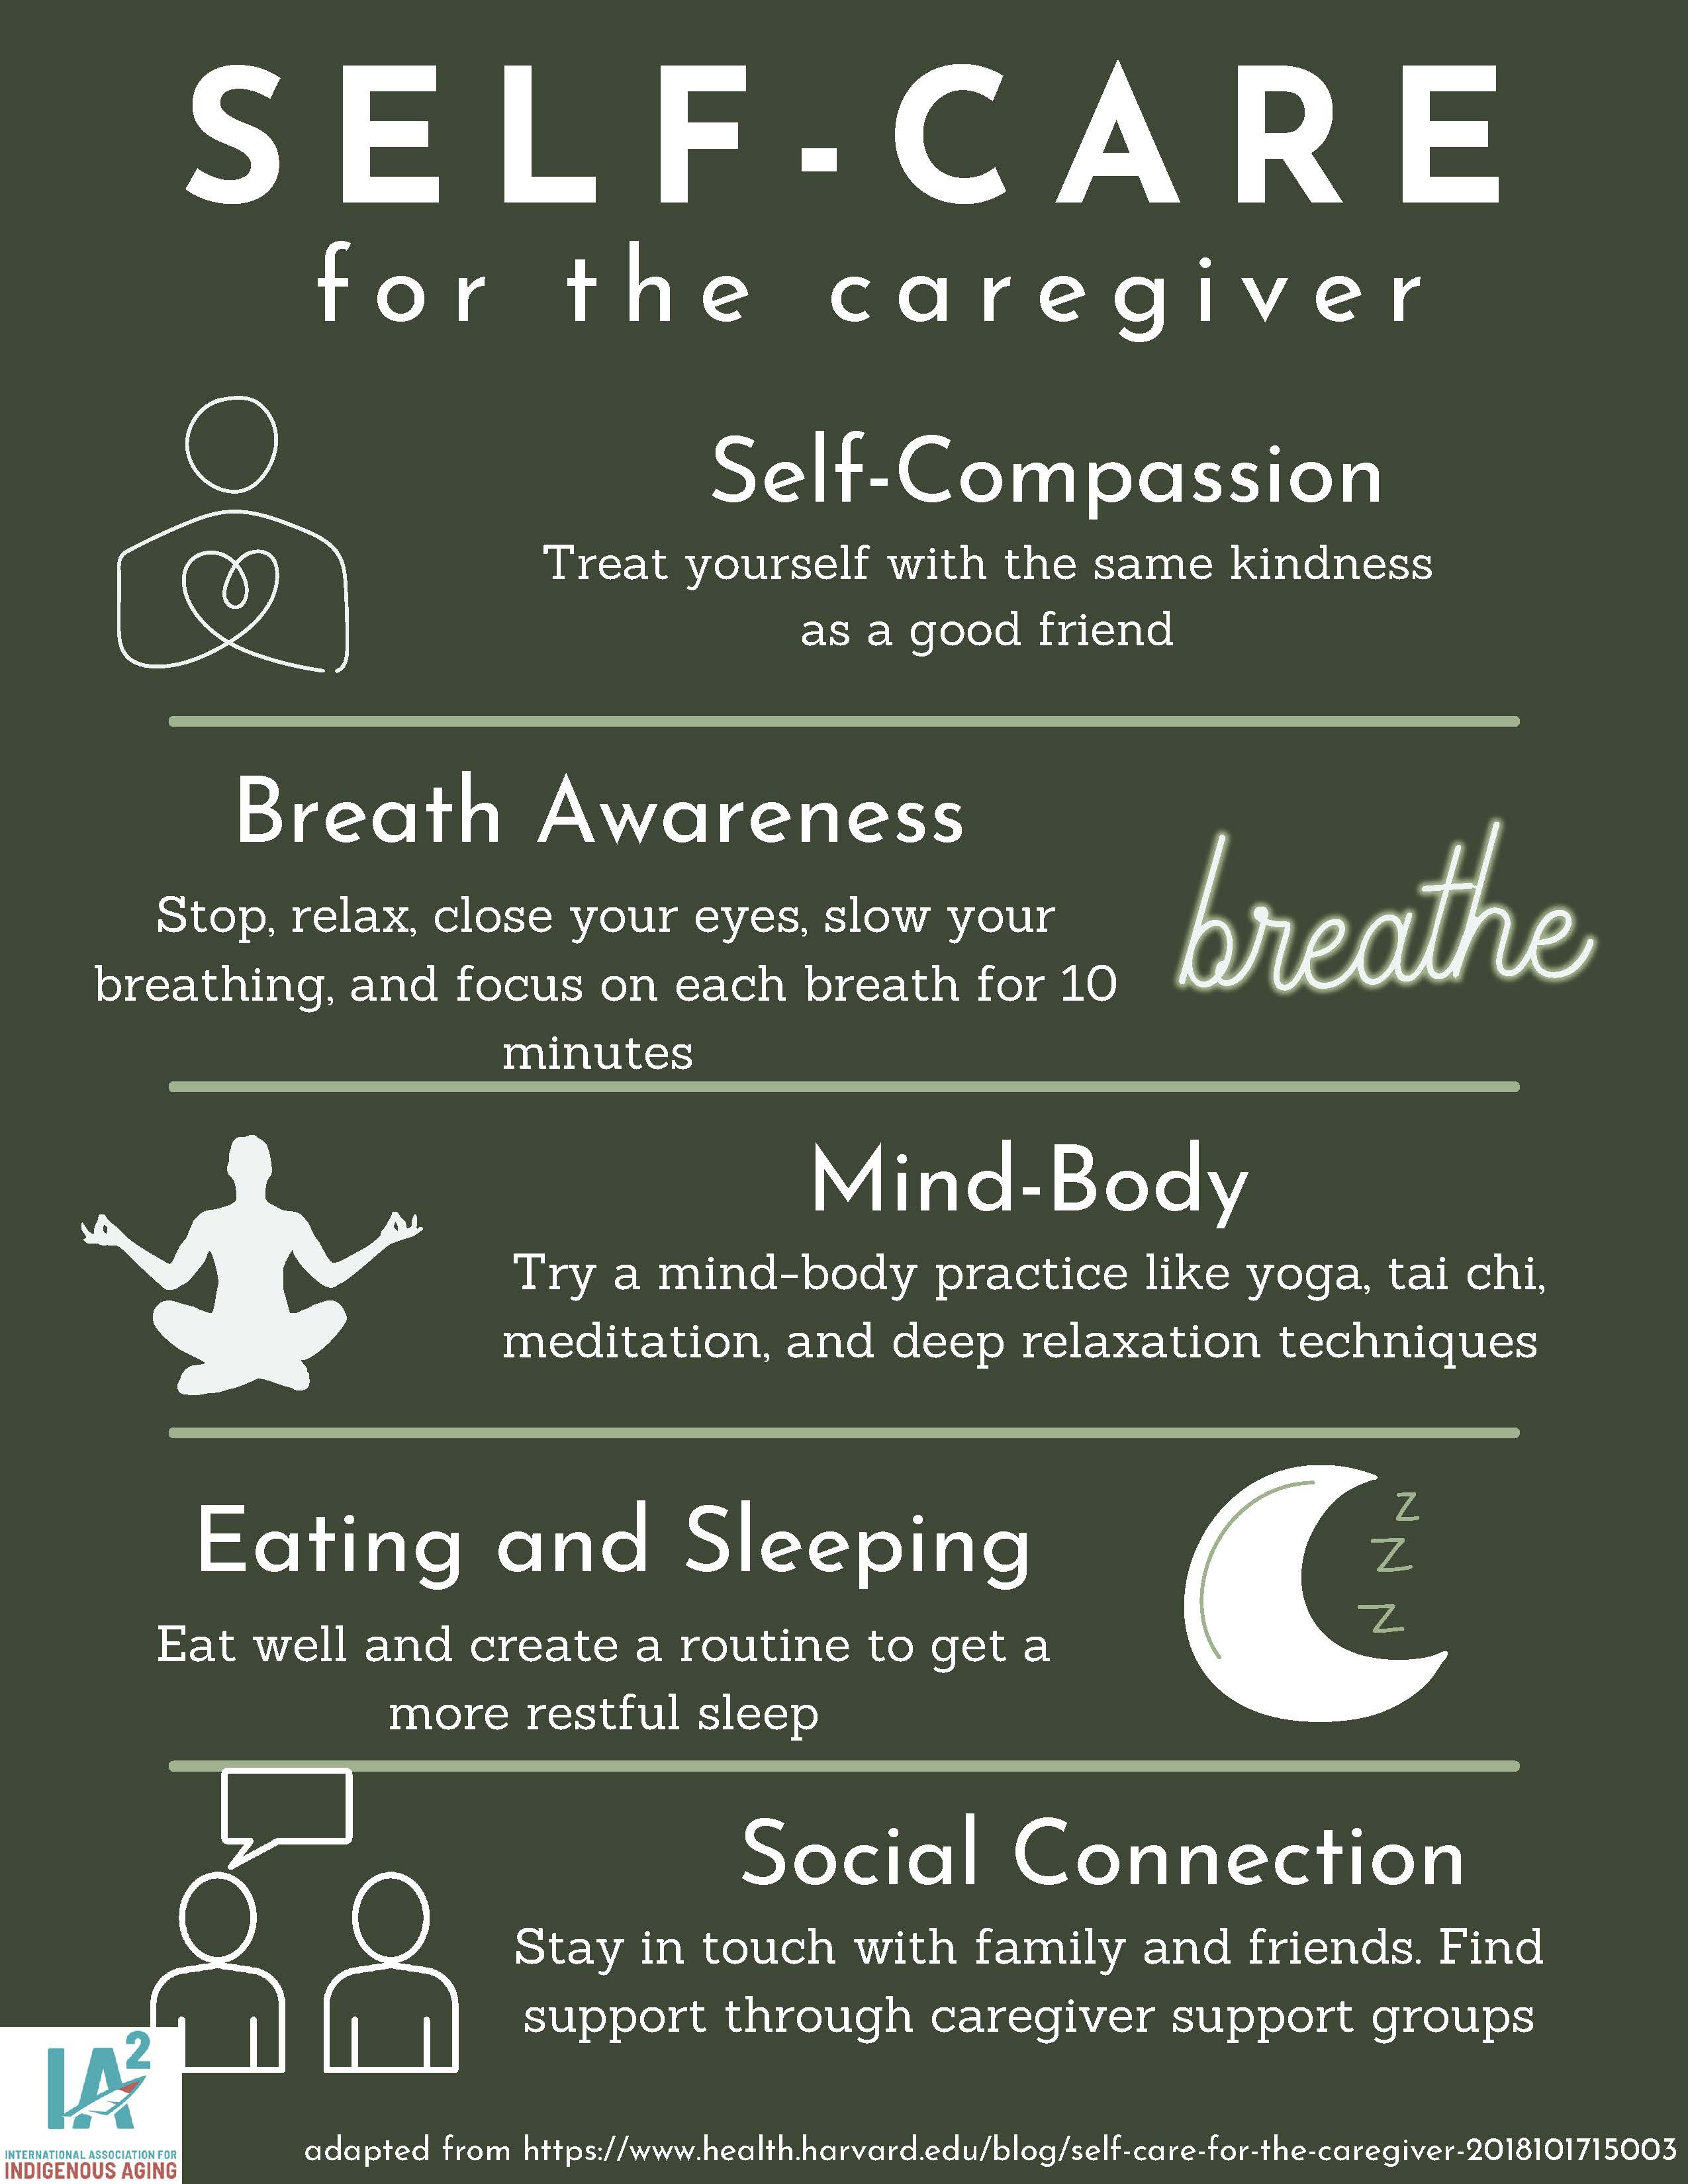 flyers-caregiver-self-care-tips-international-association-for